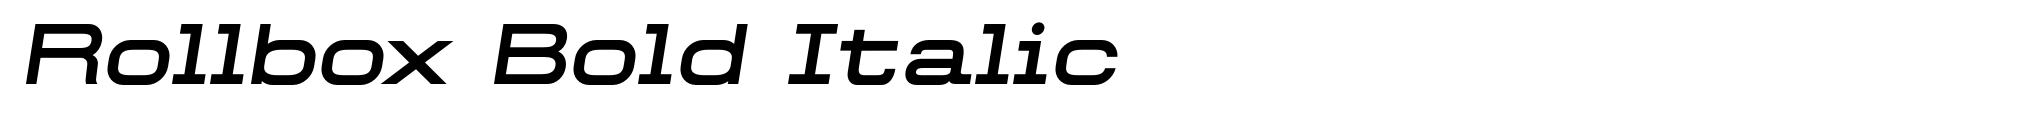 Rollbox Bold Italic image